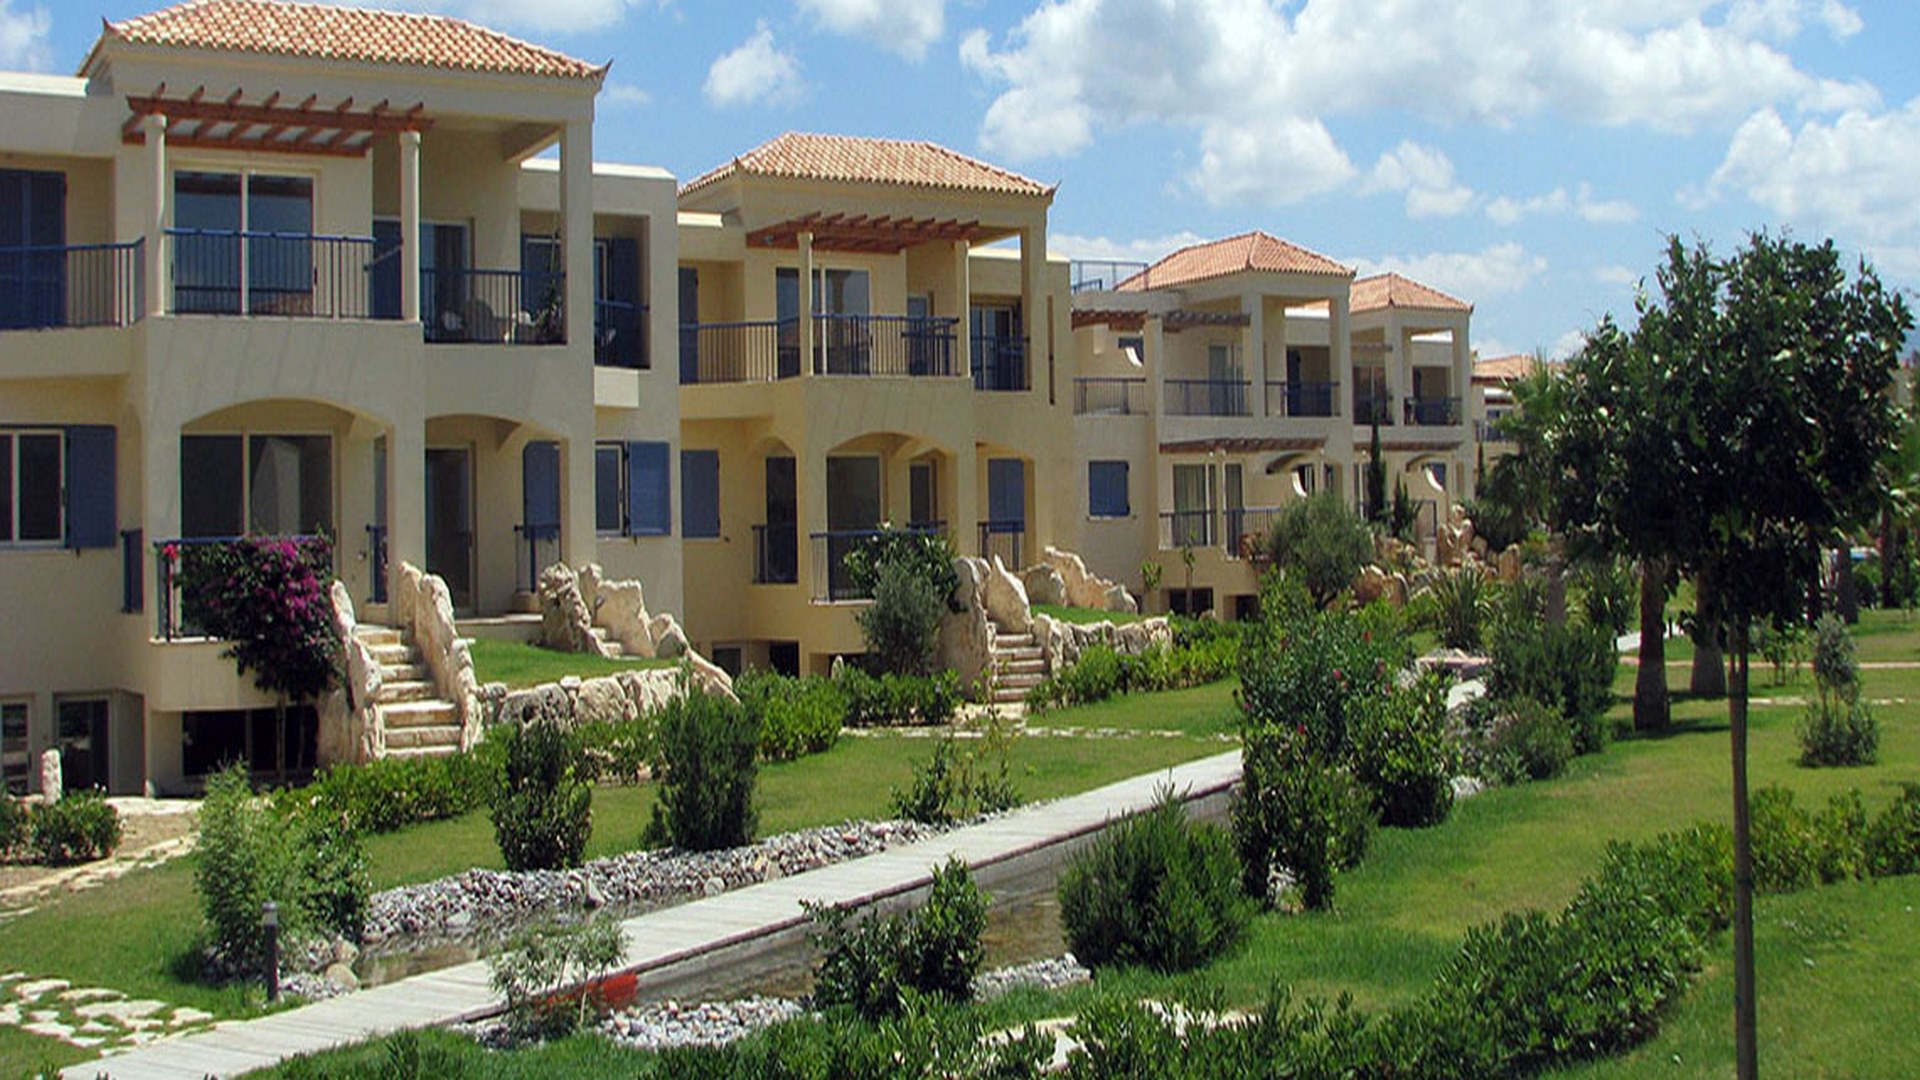 Villas on Crete island